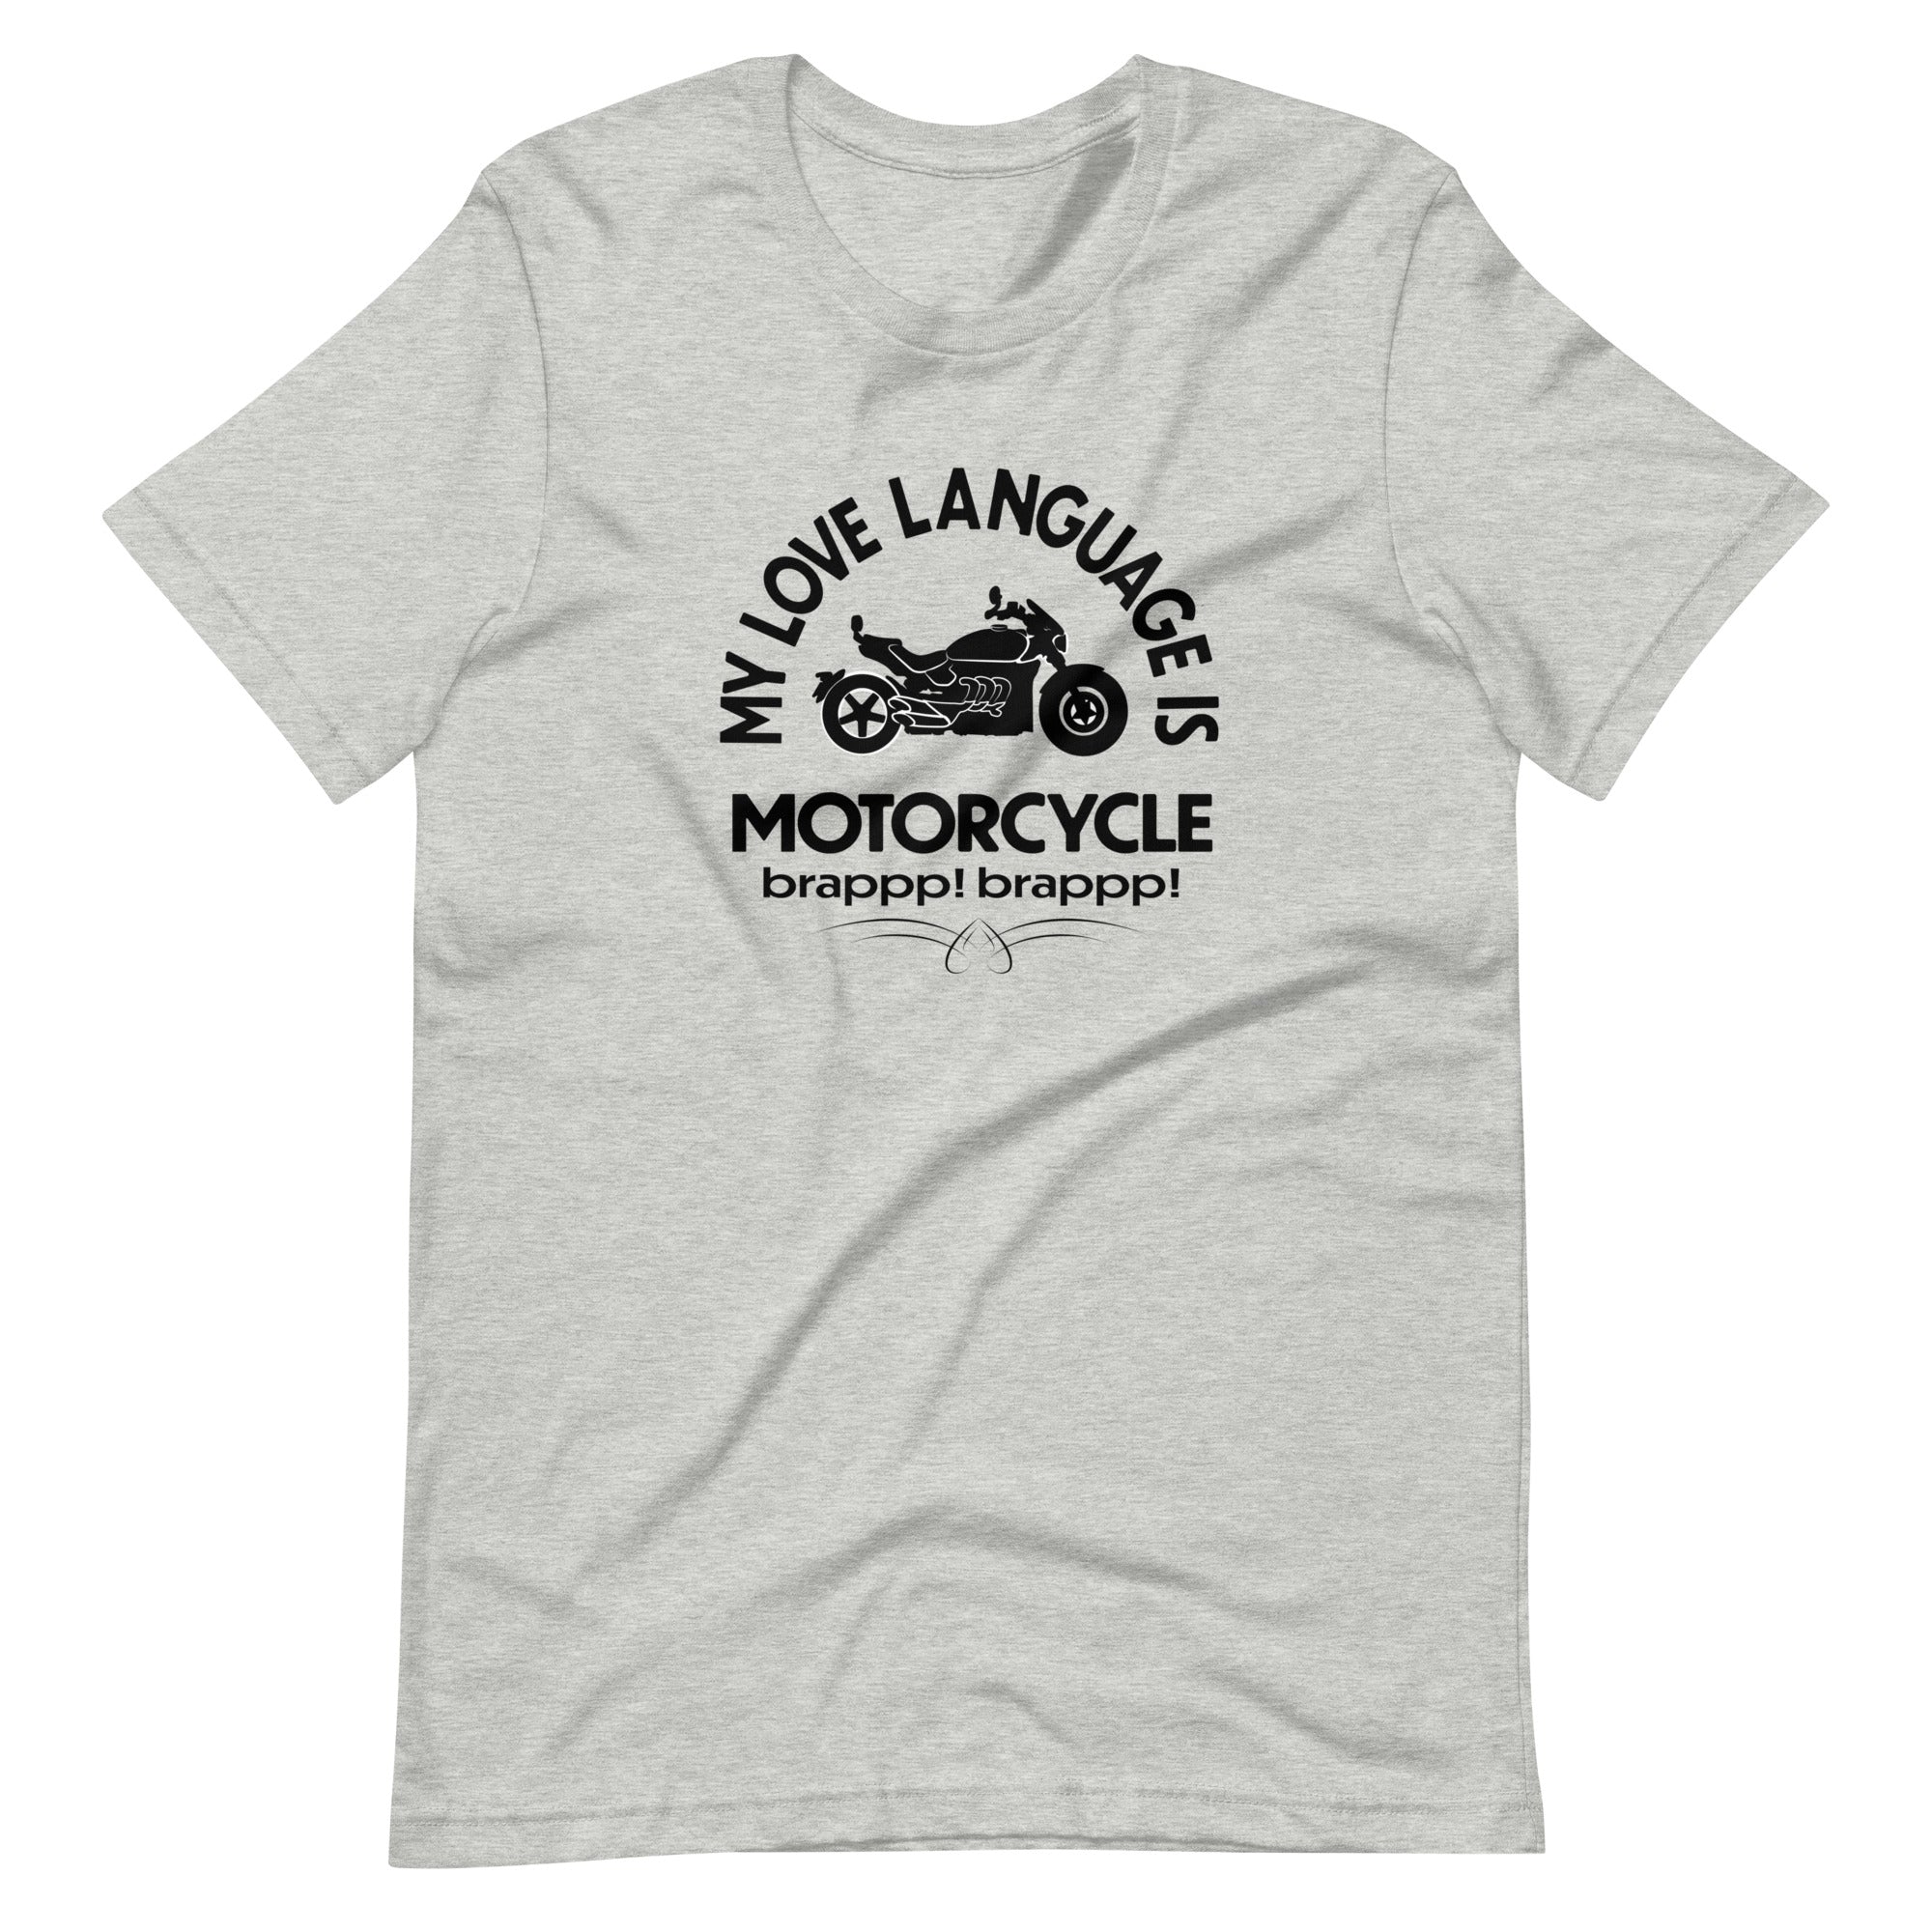 "My Love Language is Motorcycle" Tee Shirt